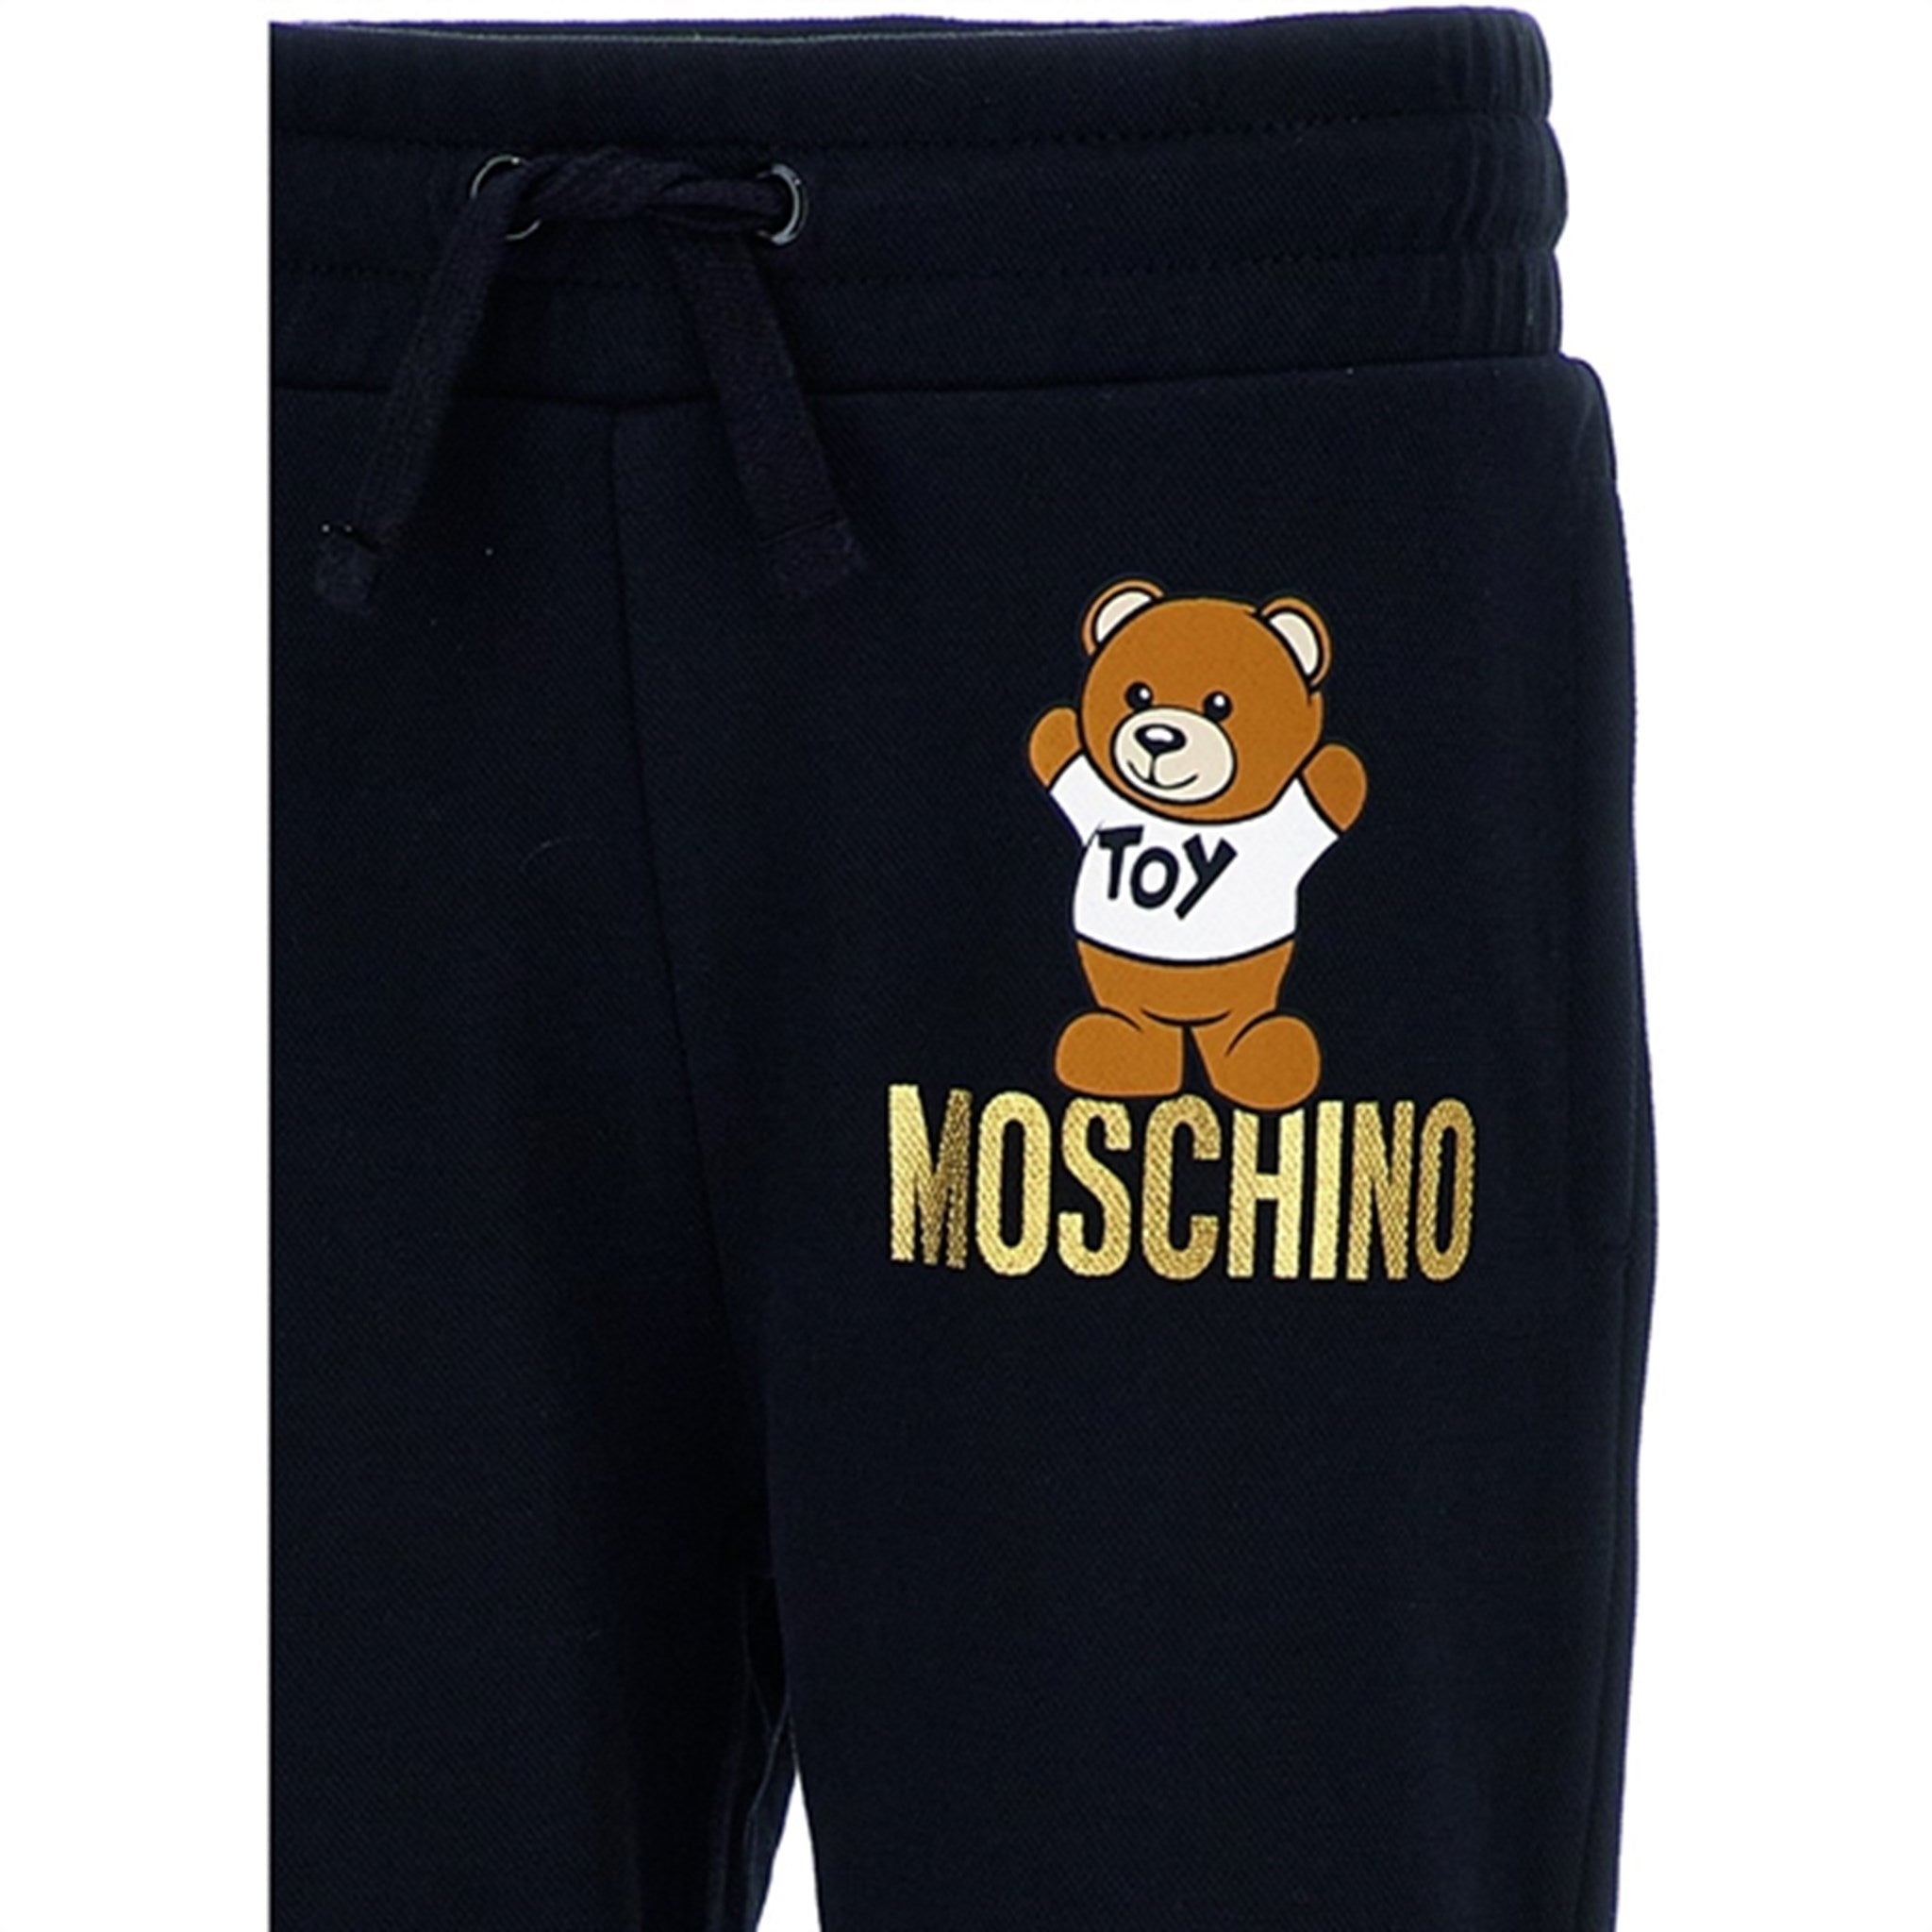 Moschino Black Pants 2